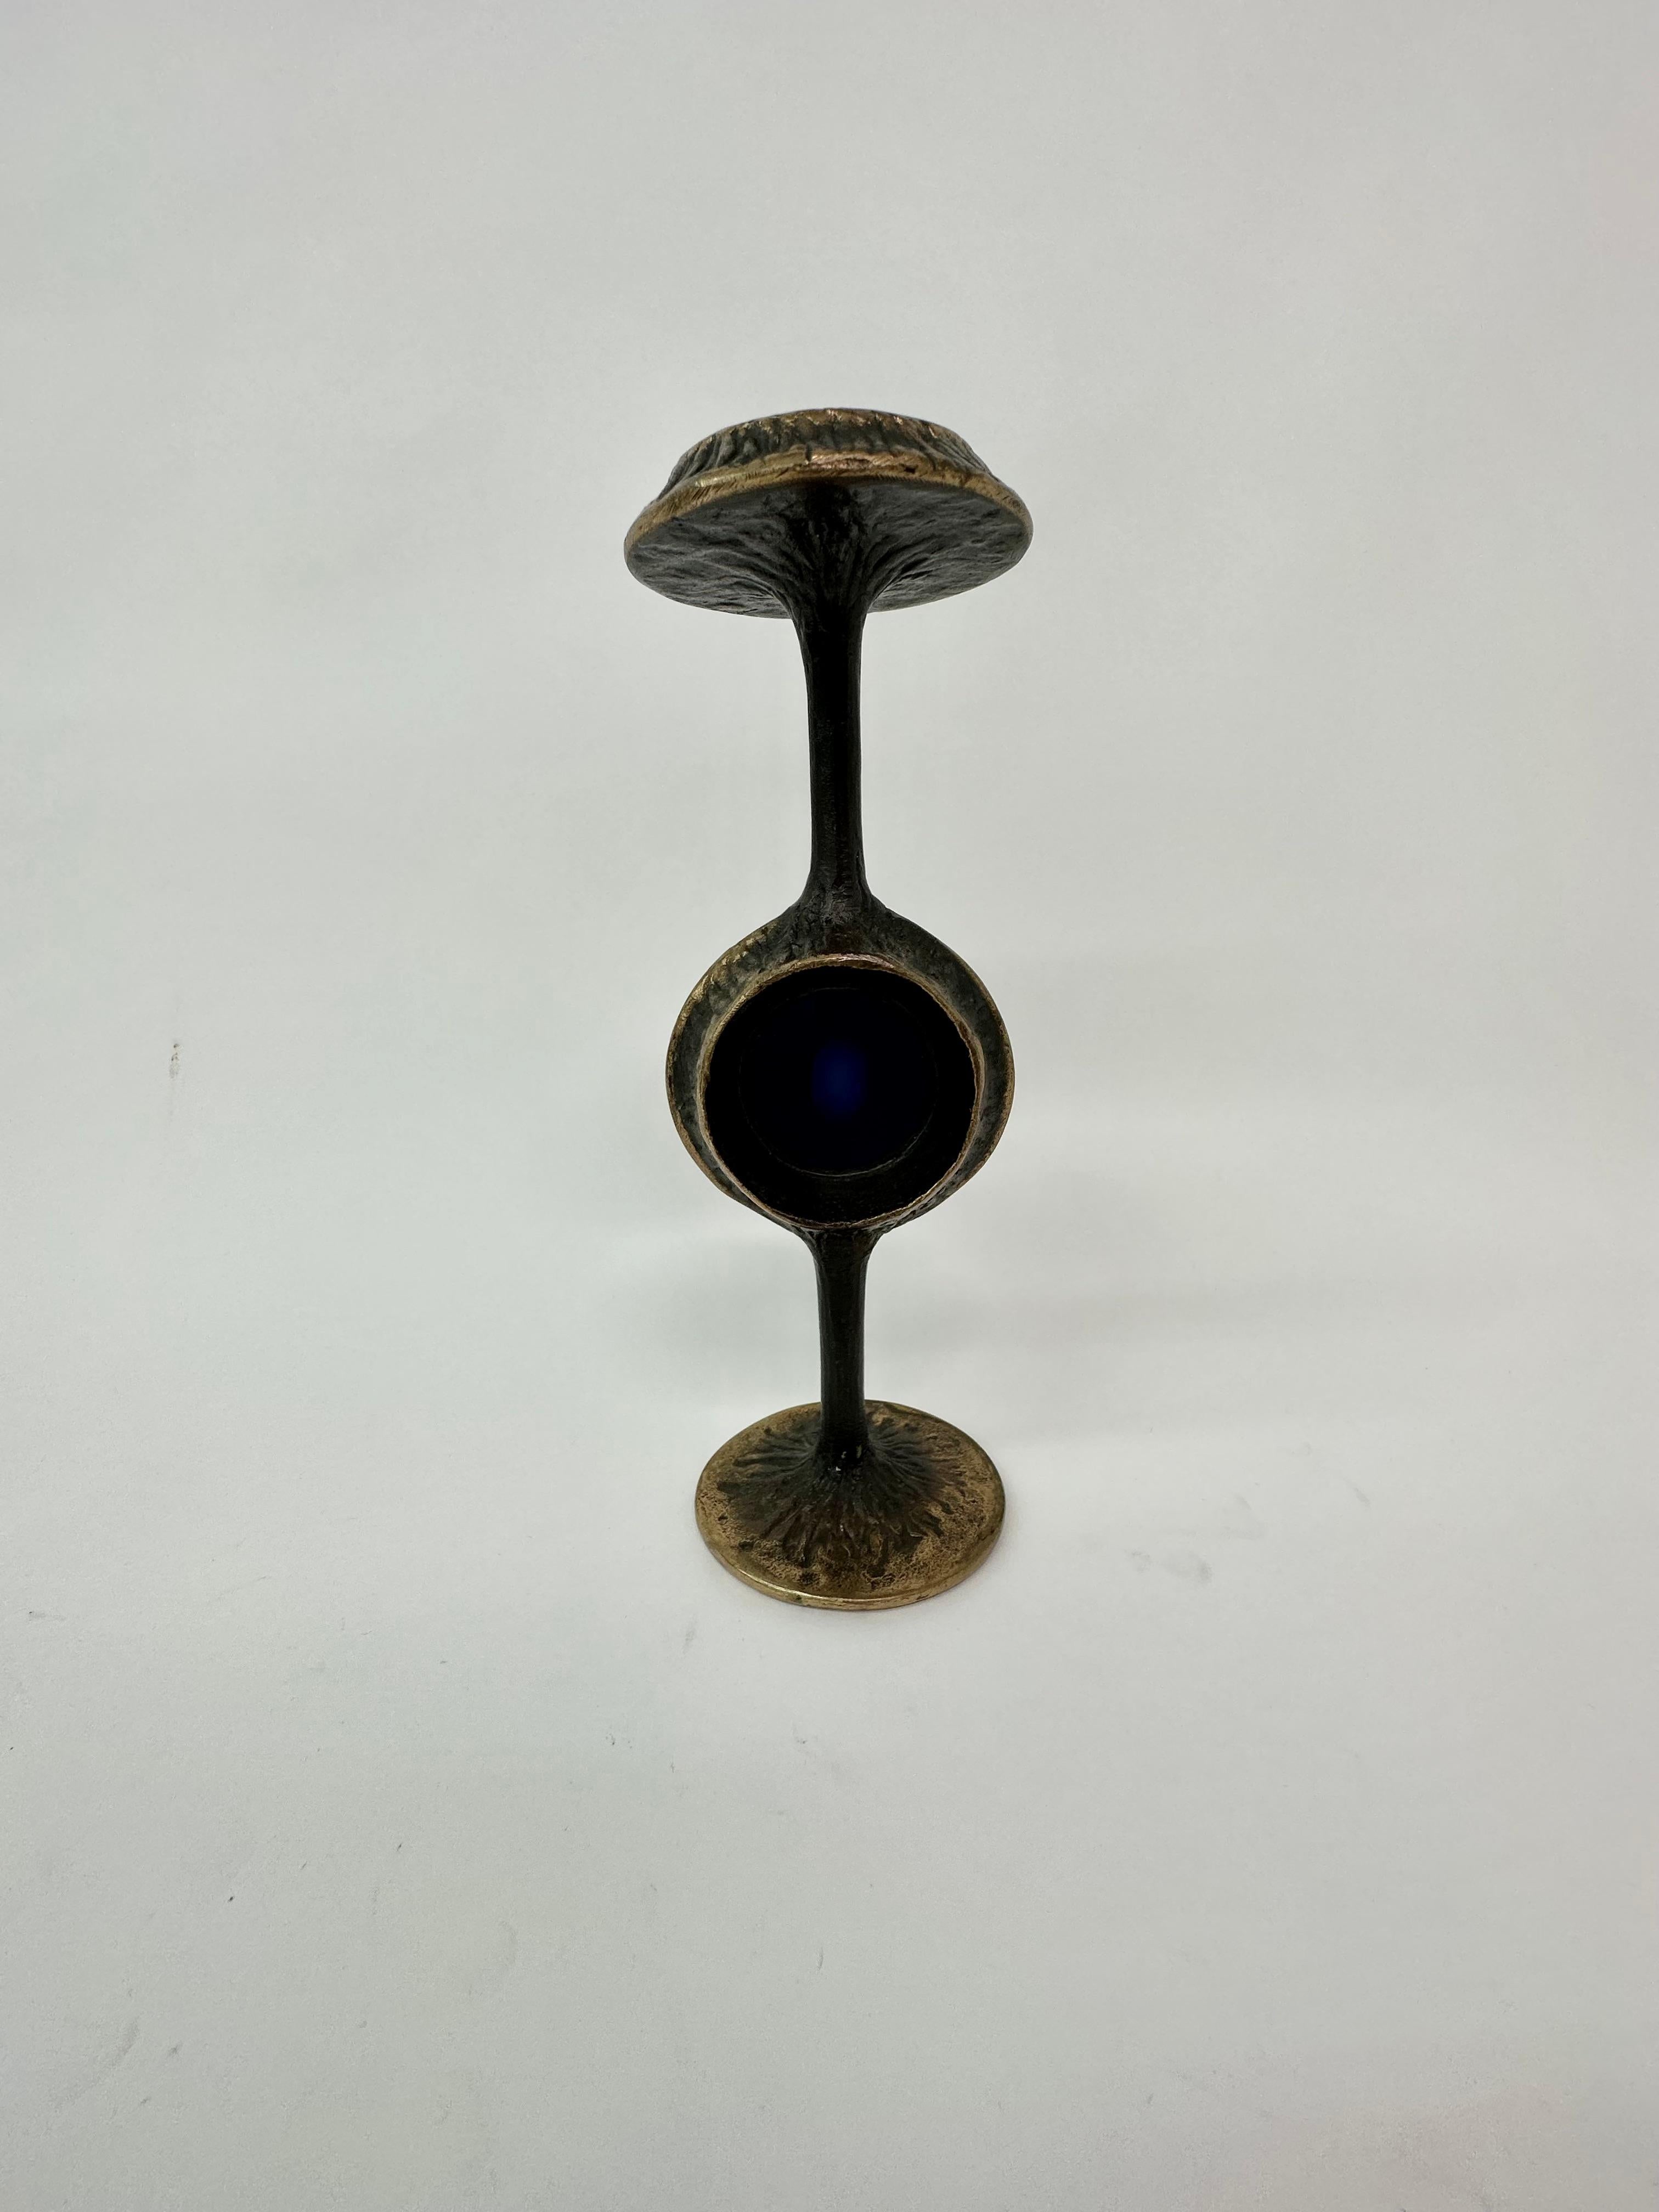 Brutalist bronze candle stick with blue crystal , 1970’s

Dimensions: 23 cm H, 8cm W, 7,5cm D
Condition: Good
Material: Bronze , Glass
Color: Gold , Blue